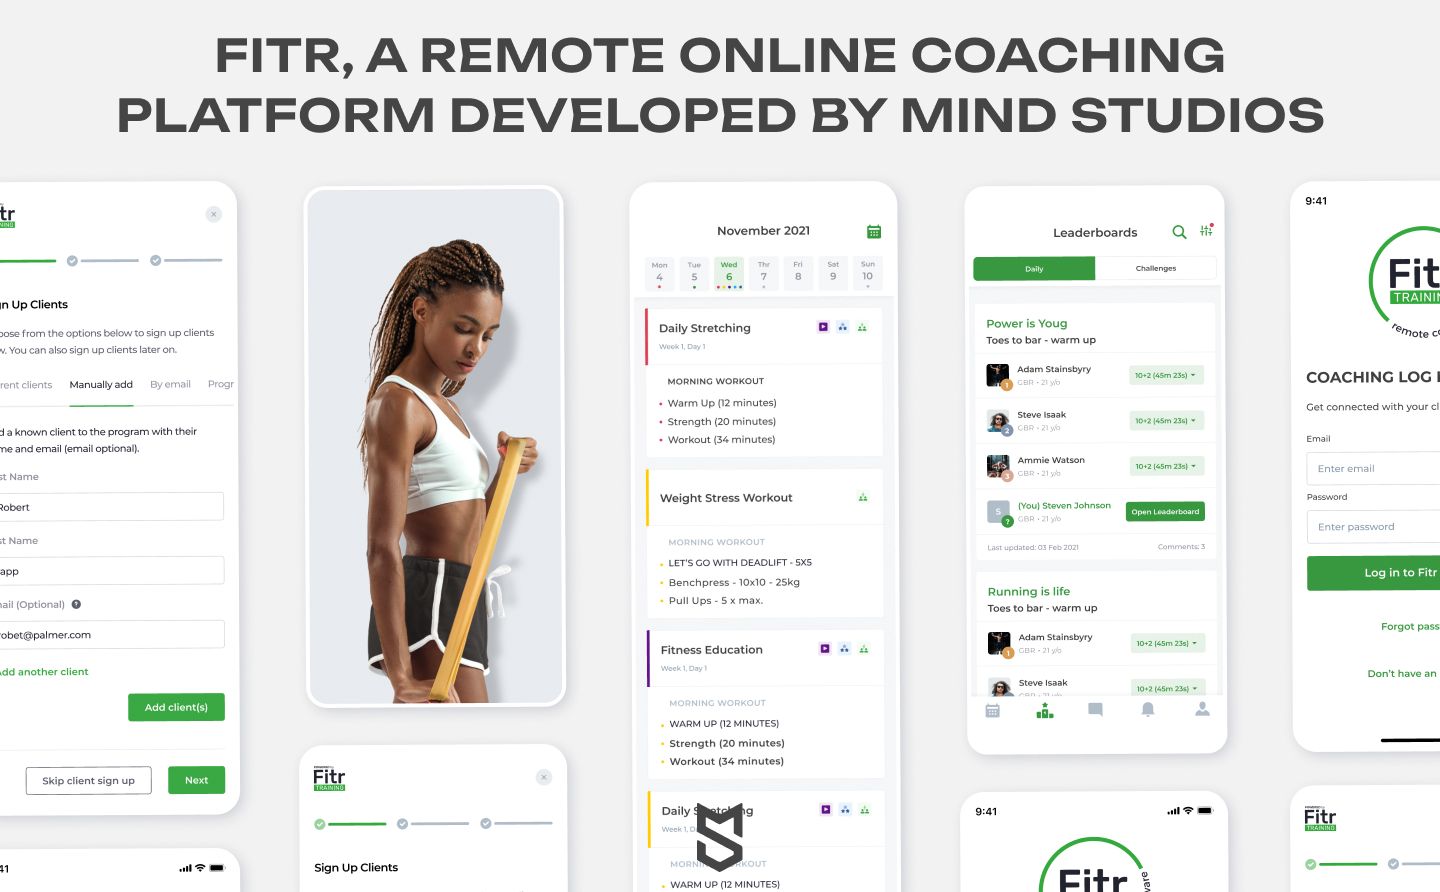 Fitr, a remote online coaching platform developed by Mind Studios